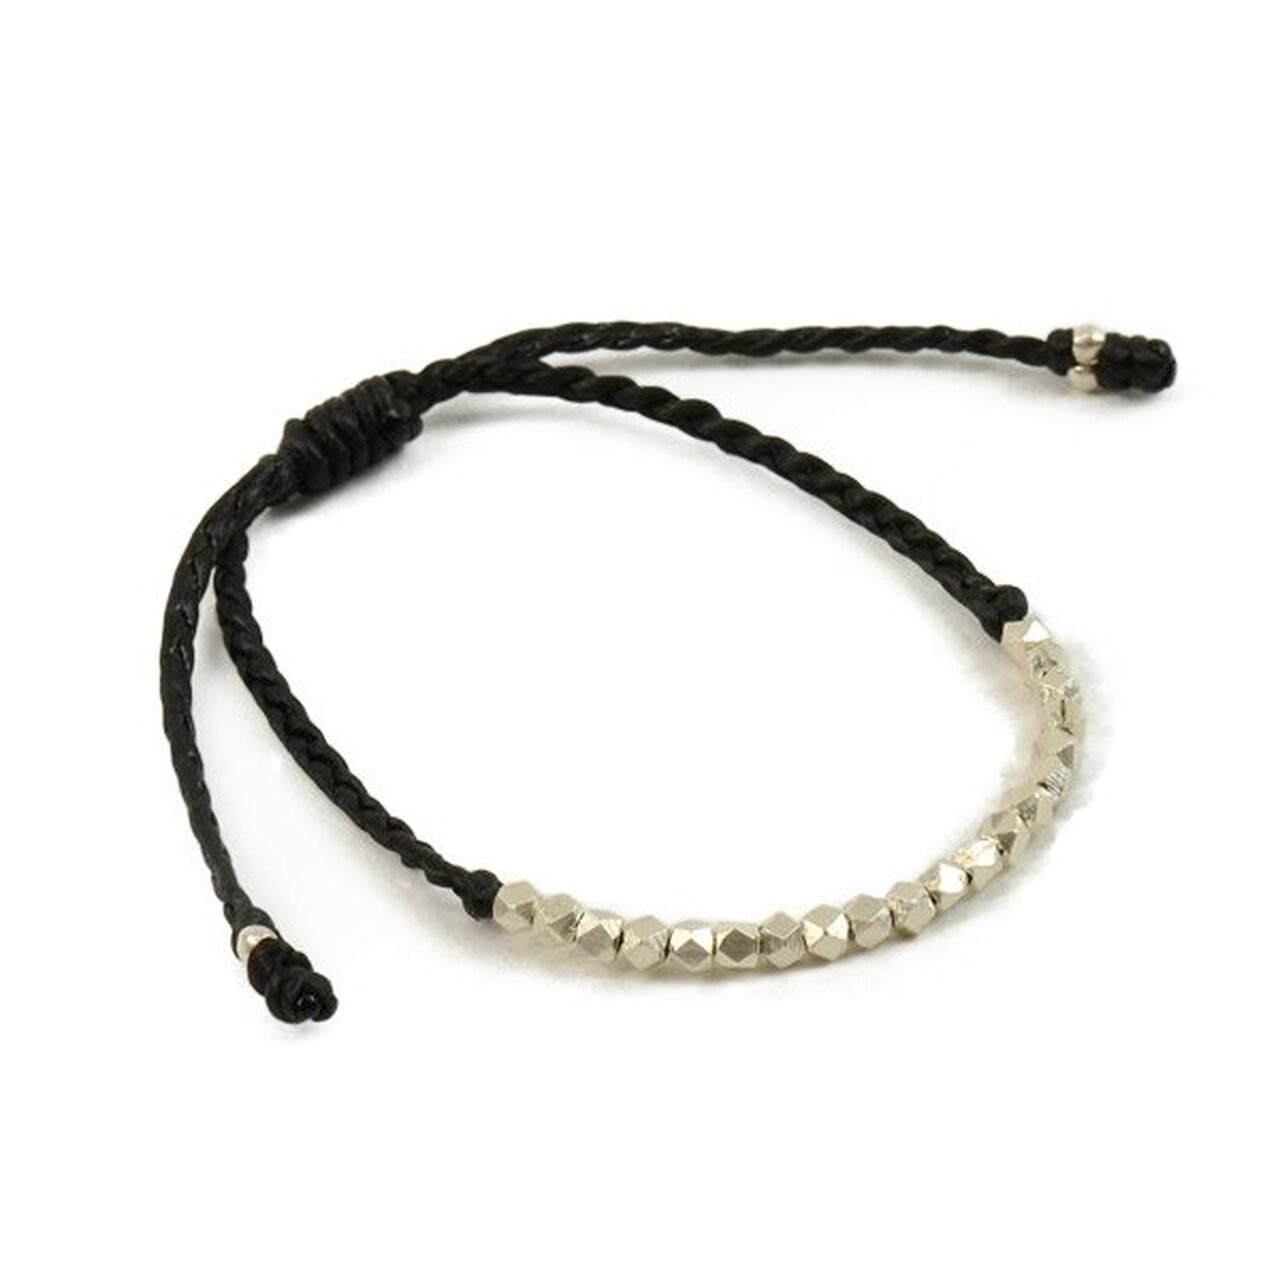 Karen Silver Beaded Wax Cord Bracelet,Black, large image number 0